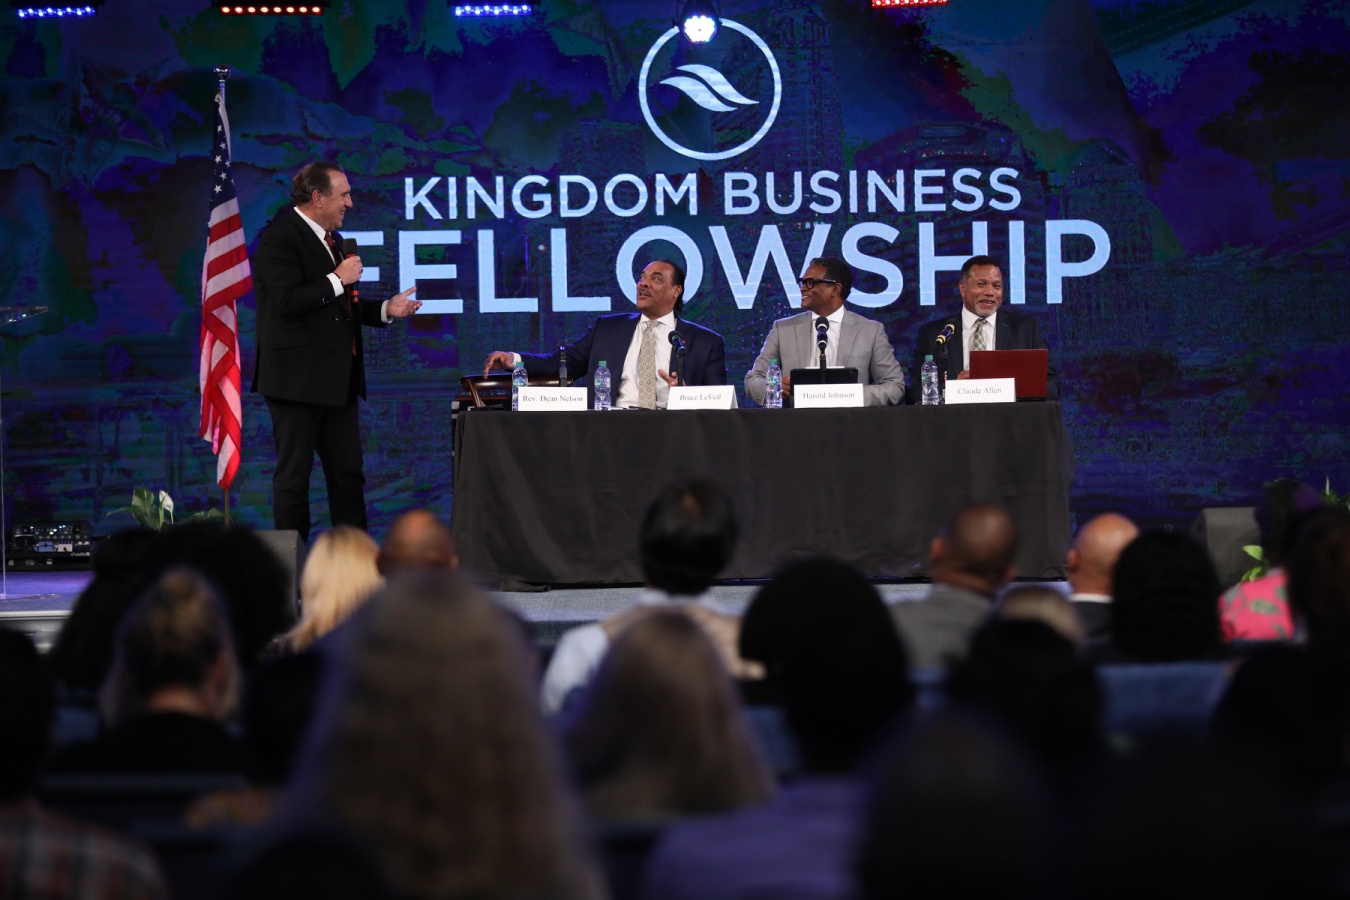 Kingdom Business Fellowship